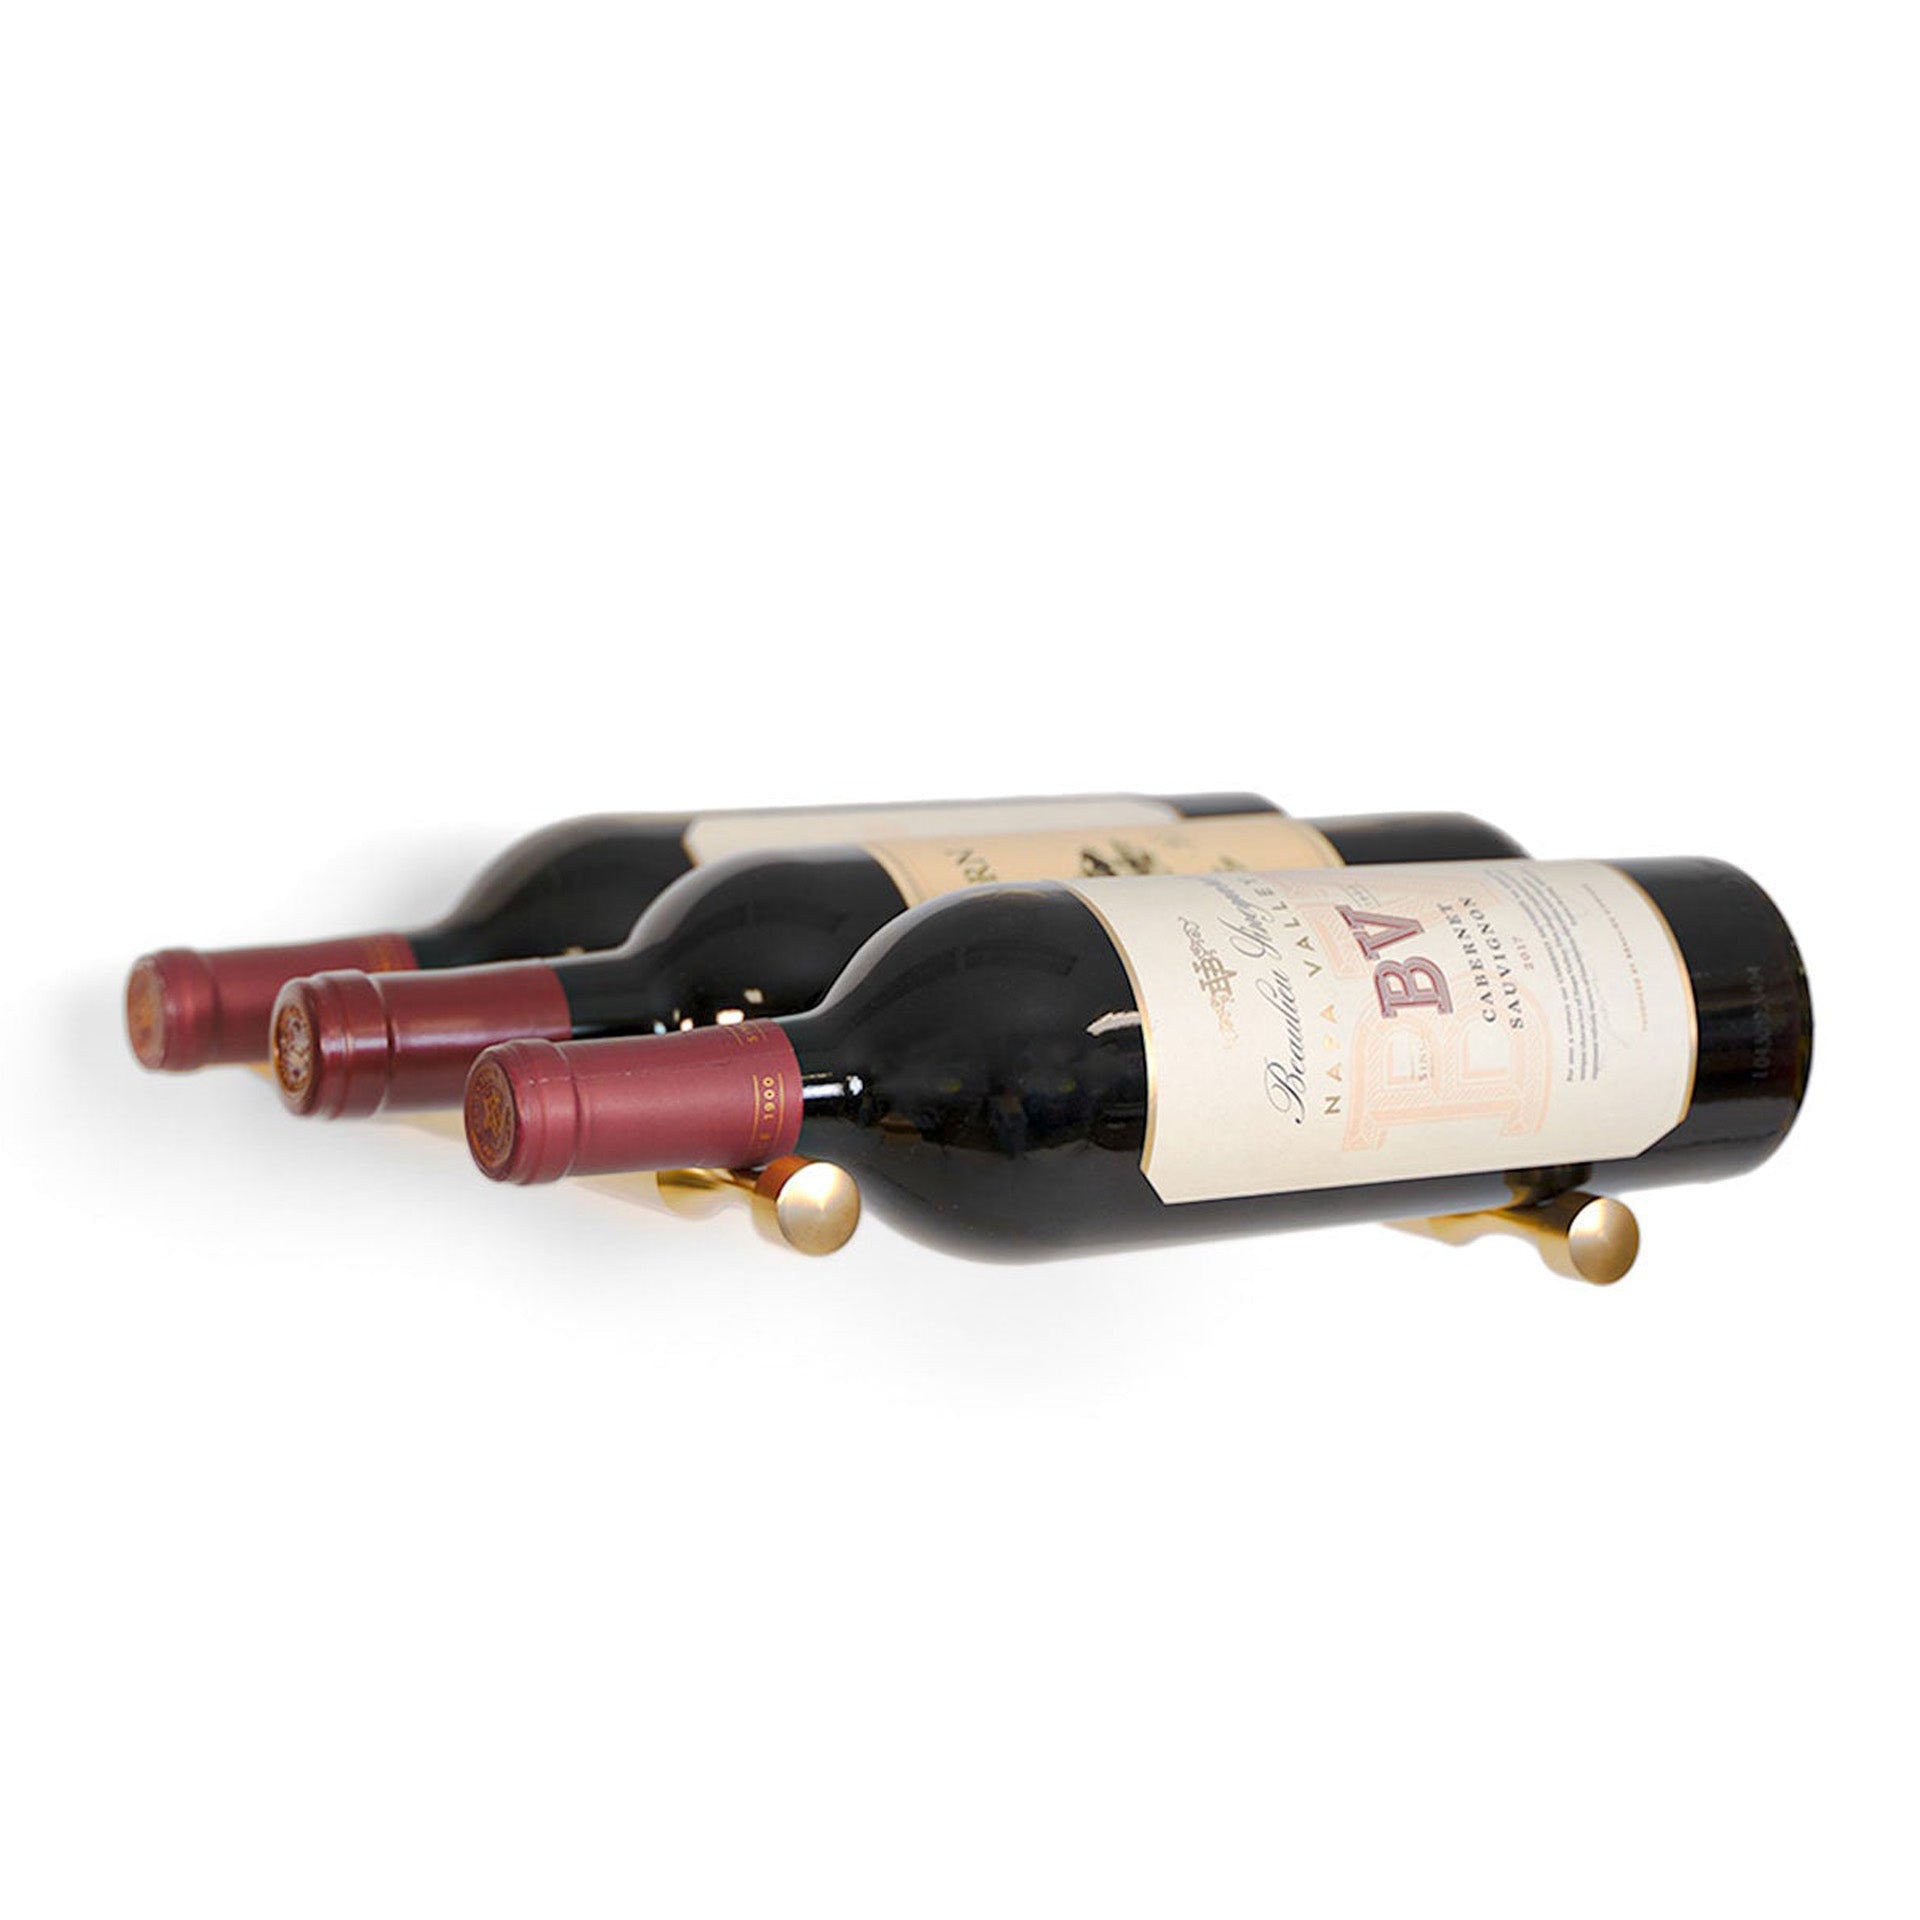 Wine Posts - 3 Bottles Deep - Sold in sets of 3 pairs (9 bottles)